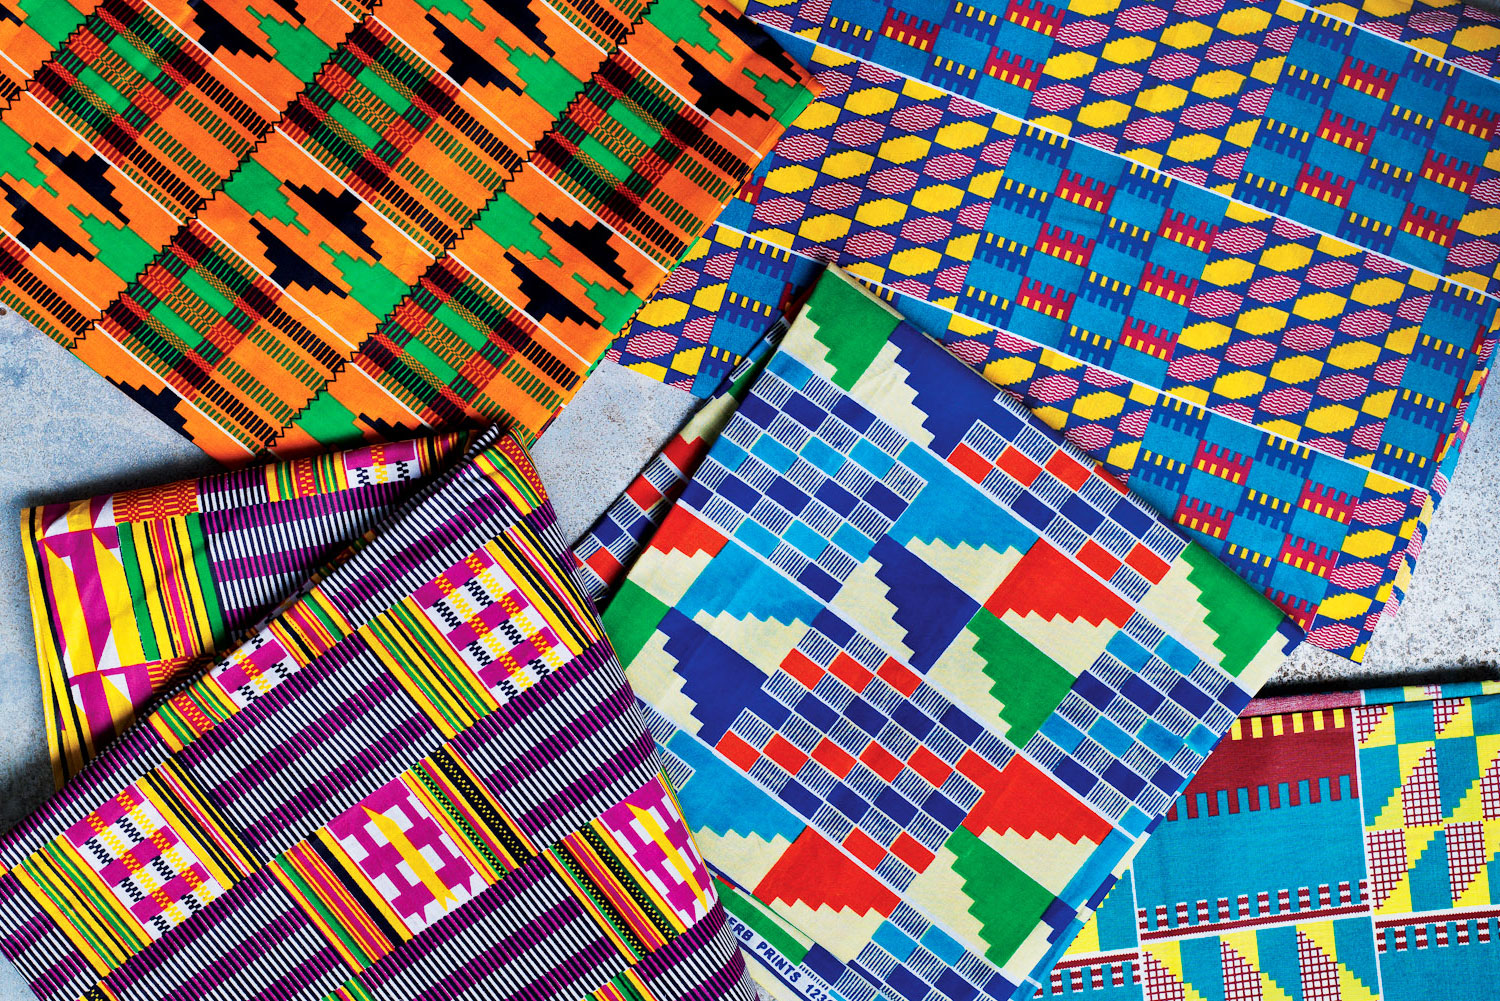 behind-ghana-s-colourful-kente-cloth-international-traveller